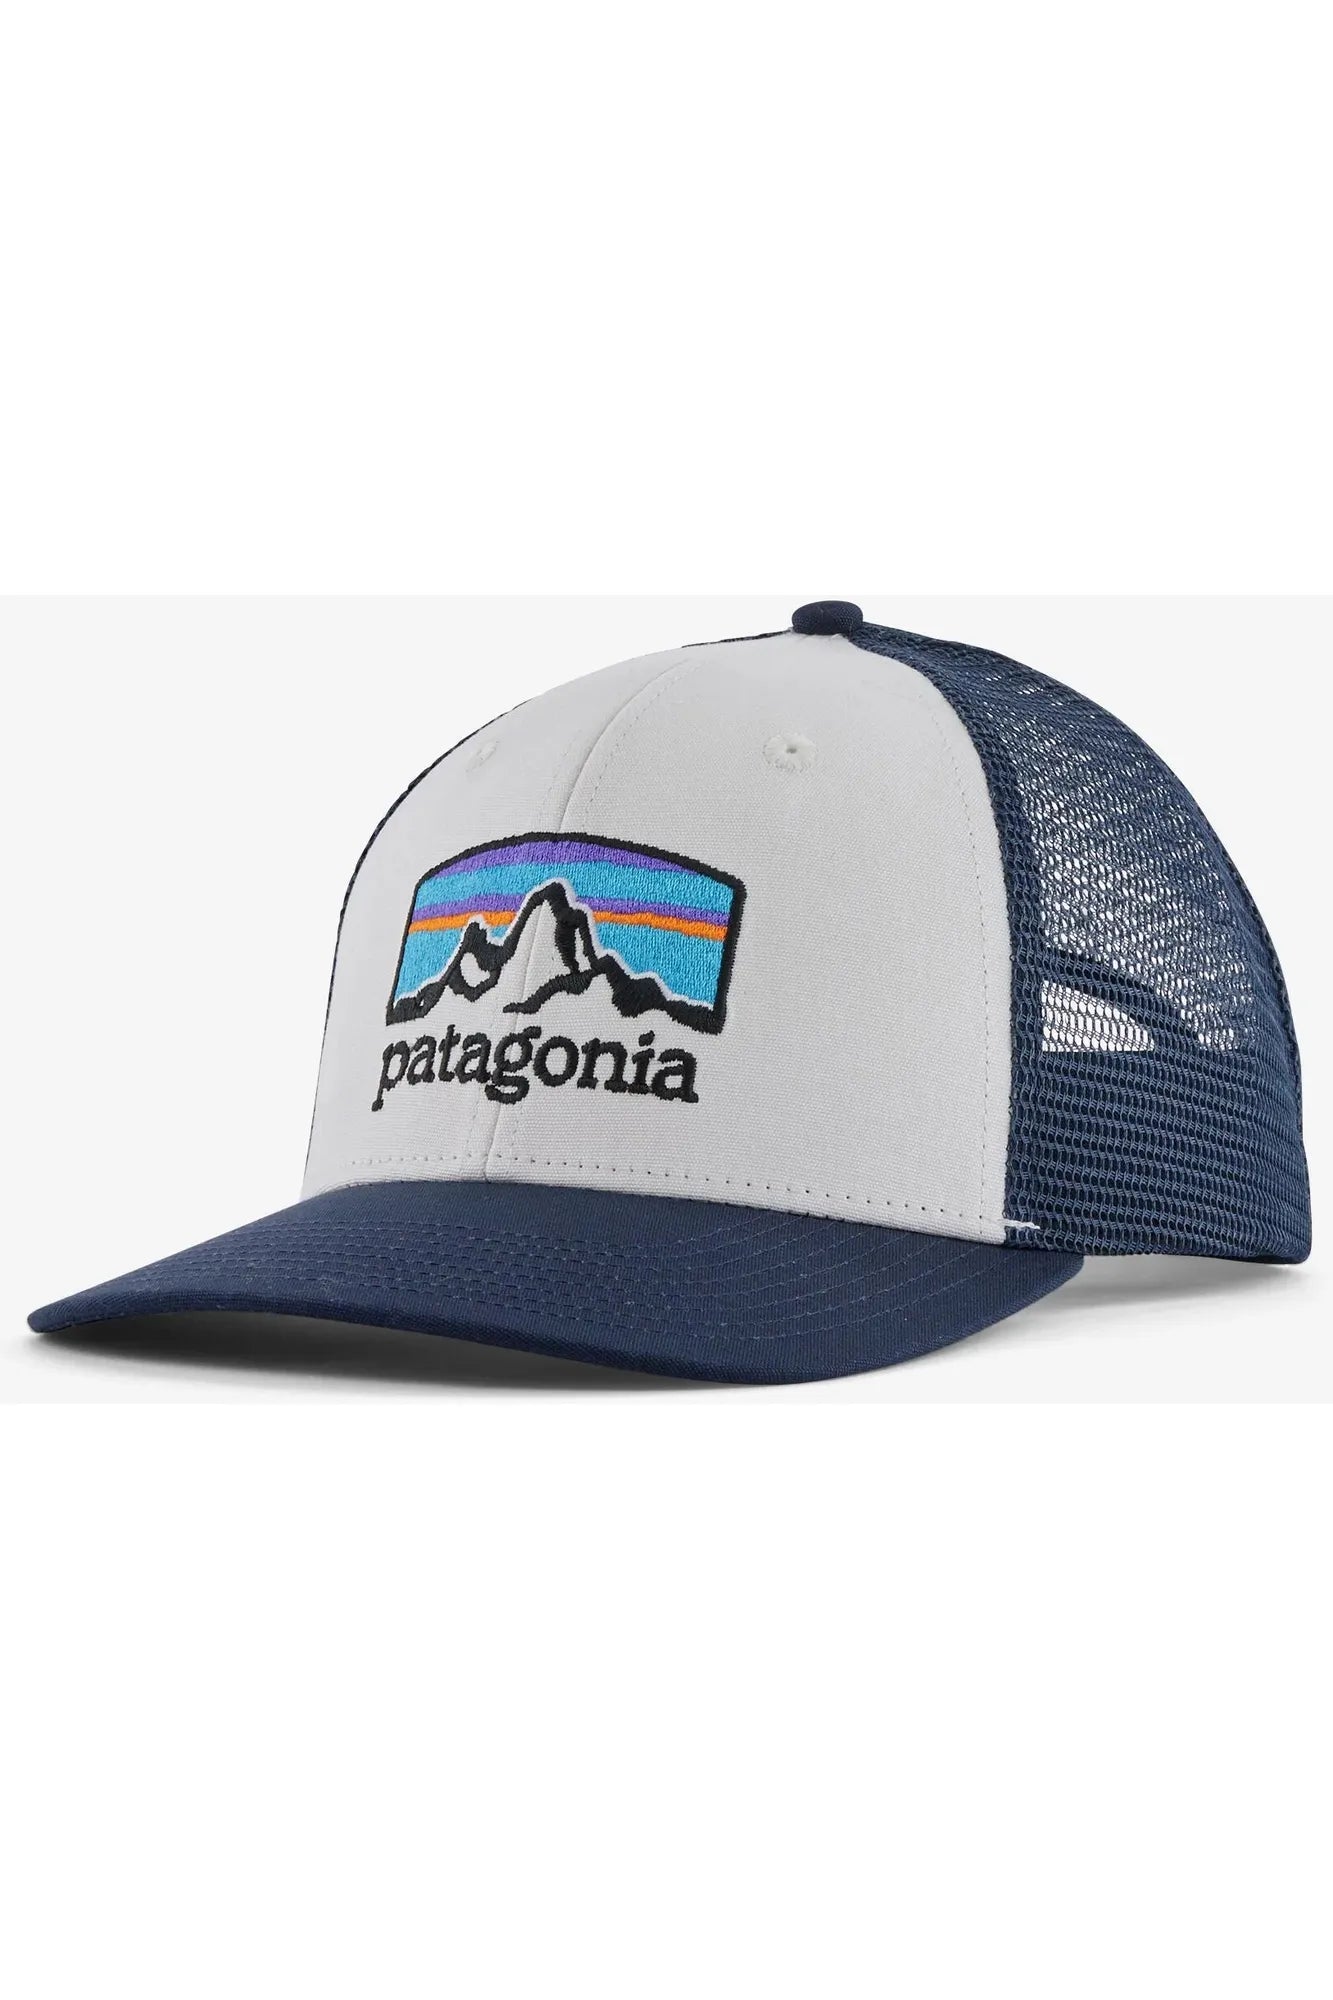 Patagonia Fitz Roy Horizons Trucker Hat White with New Navy